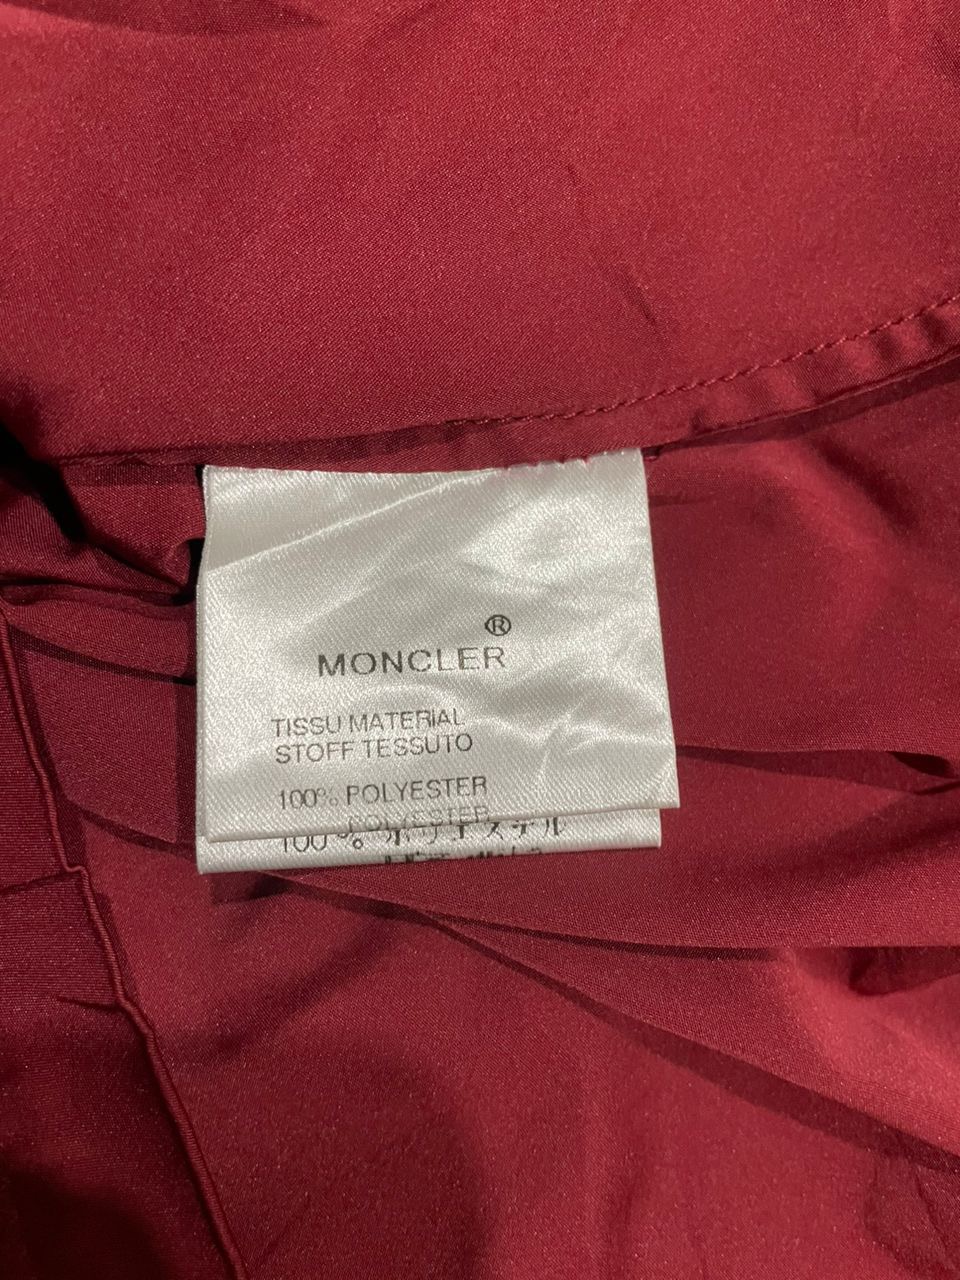 Moncler Premiere Tissu Material Stoff Tessutto Light Jacket - 22